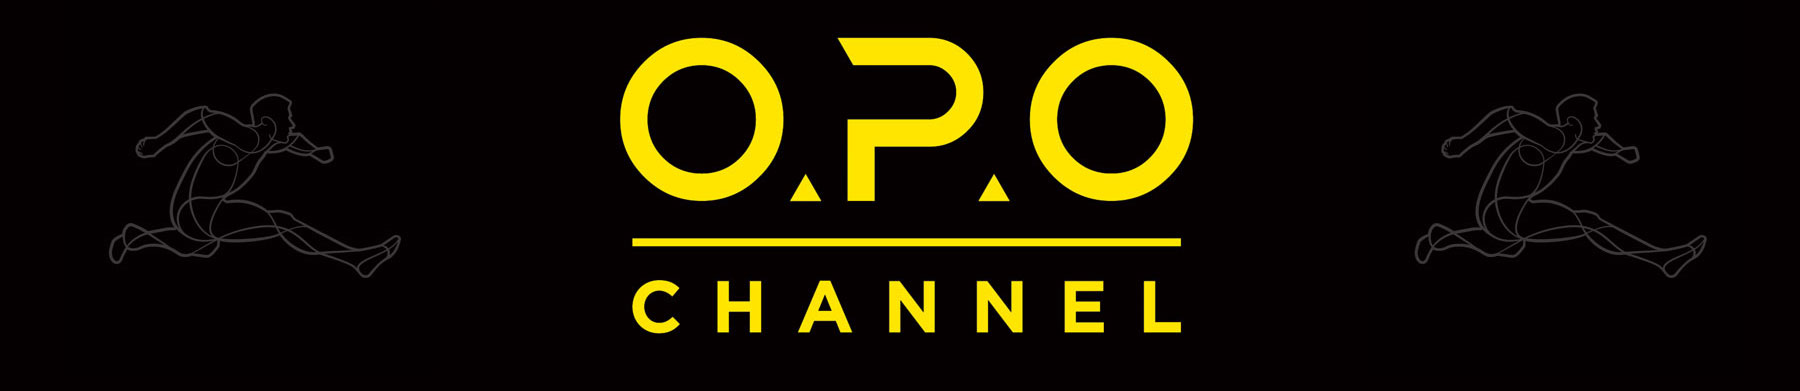 La chaîne O.P.O